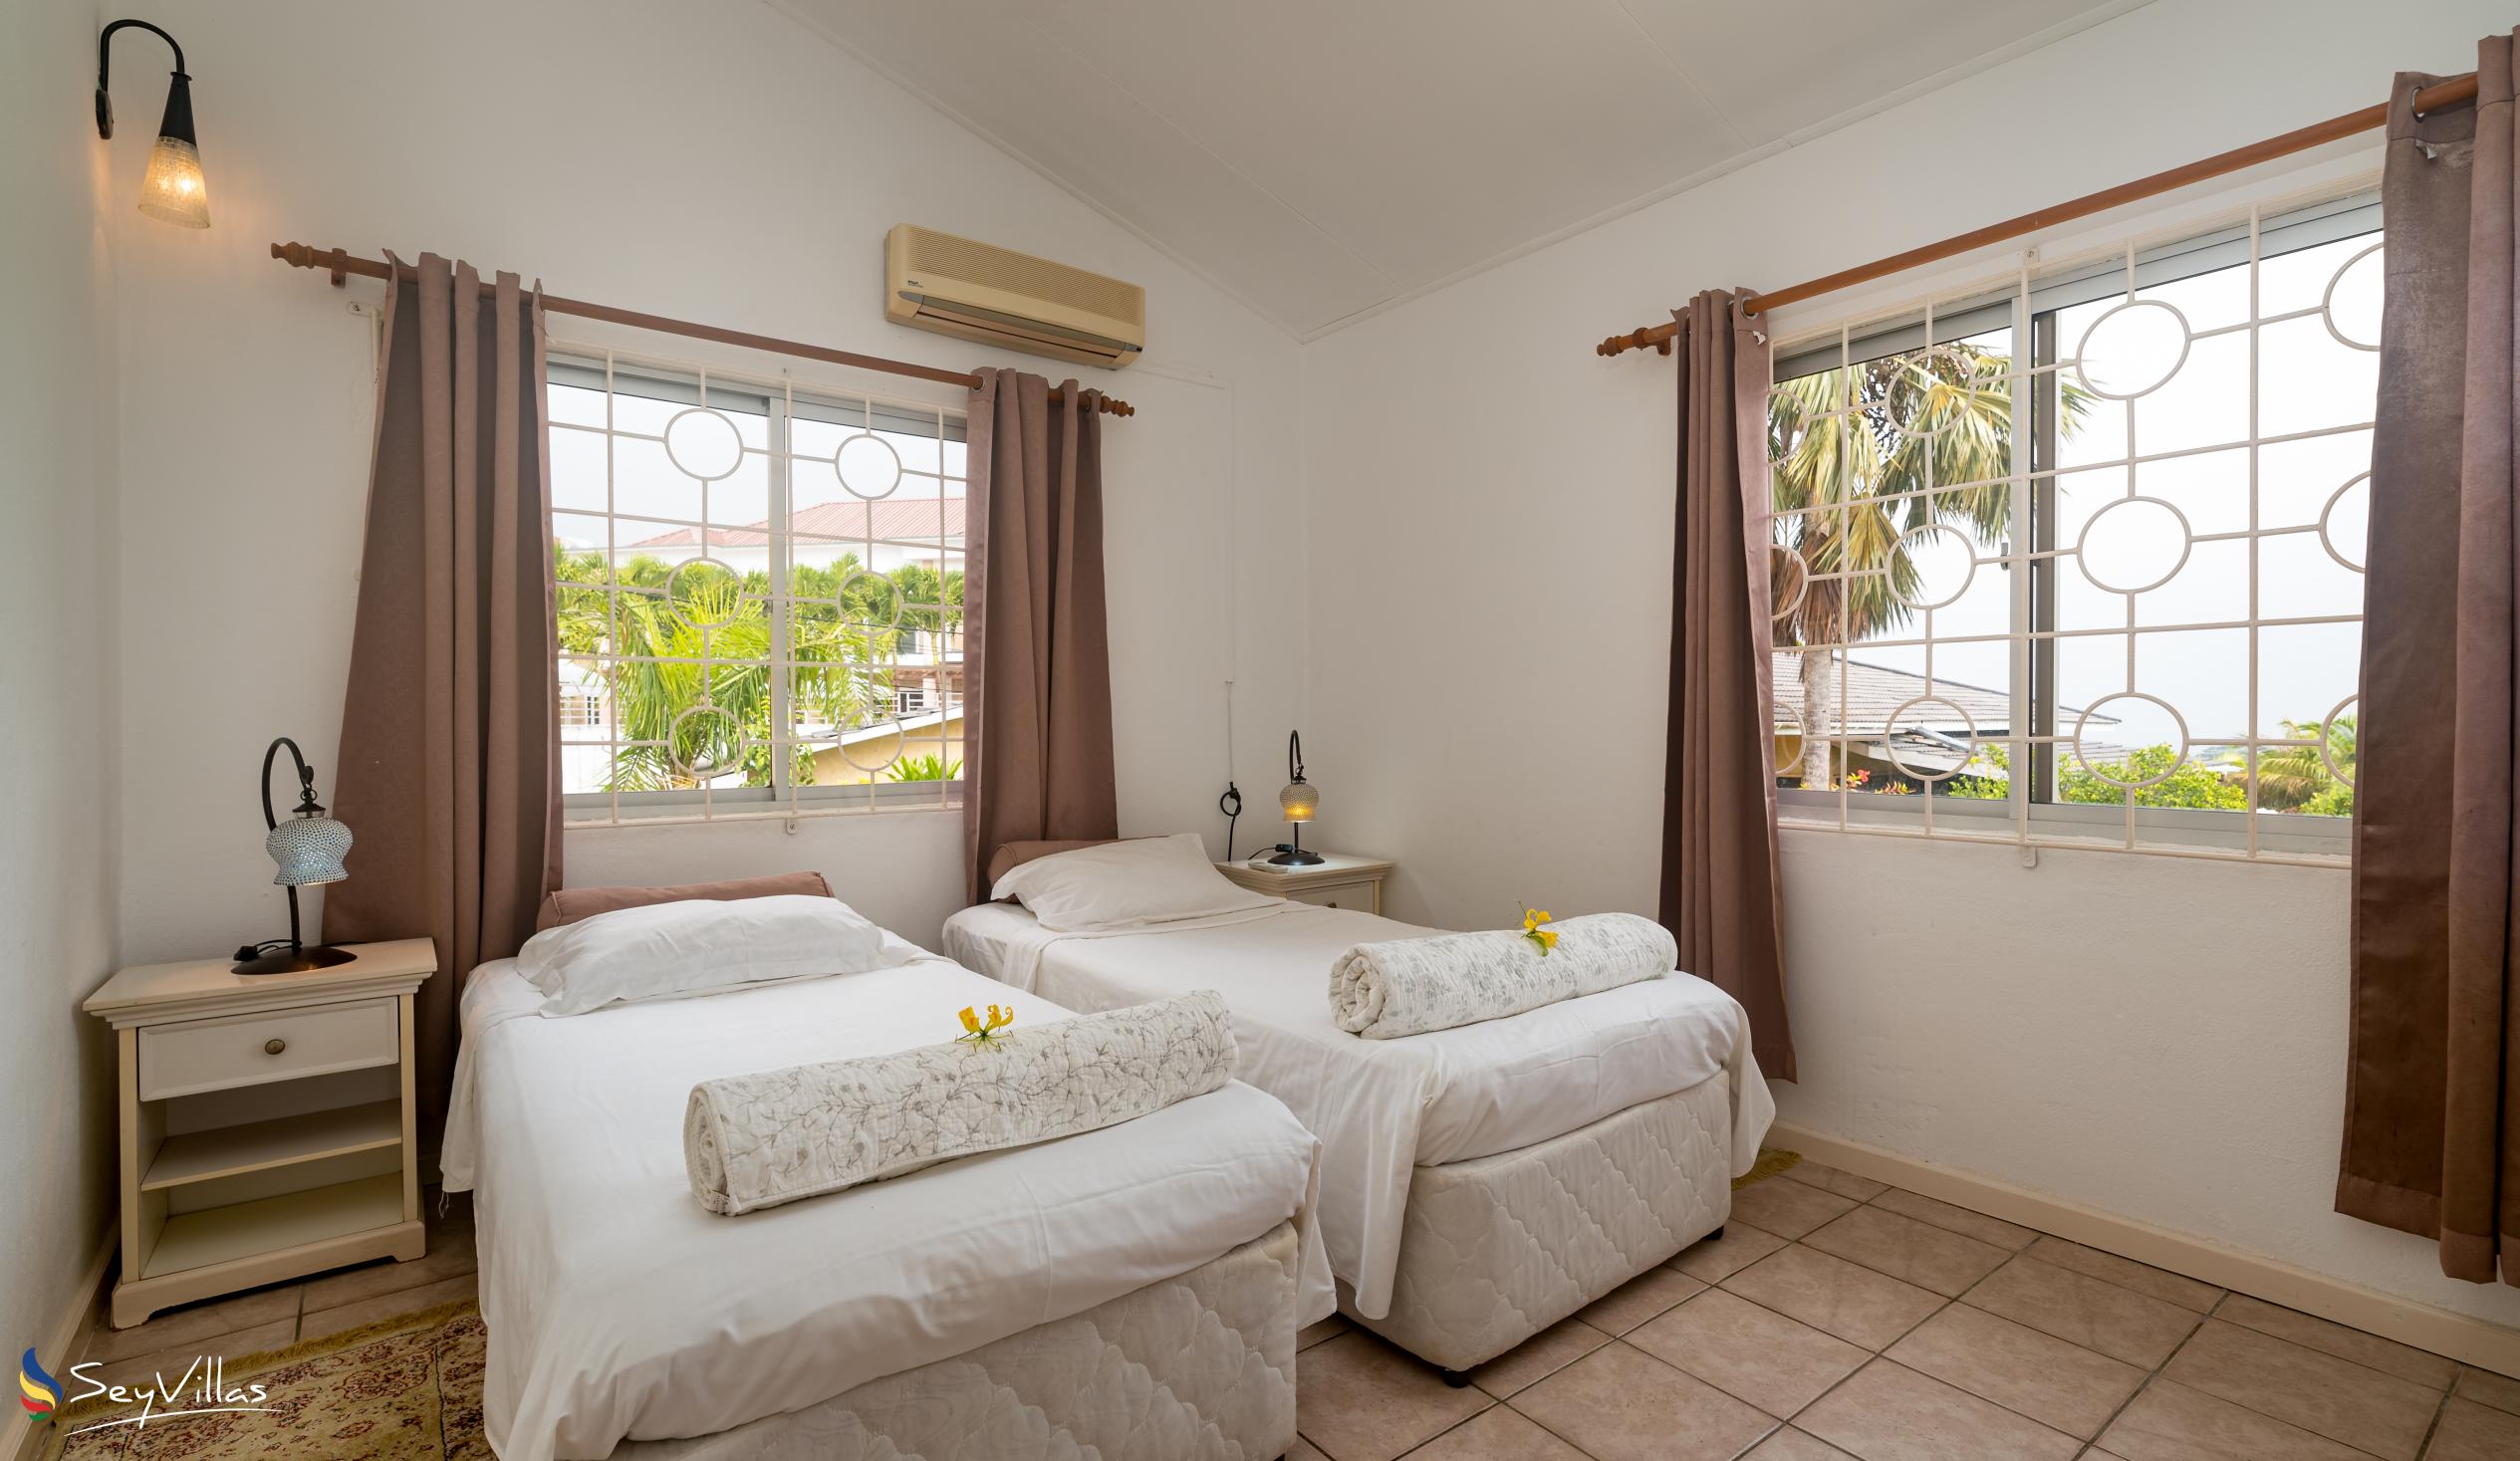 Photo 72: Residence Monte Cristo - 2-Bedroom Apartment - Mahé (Seychelles)